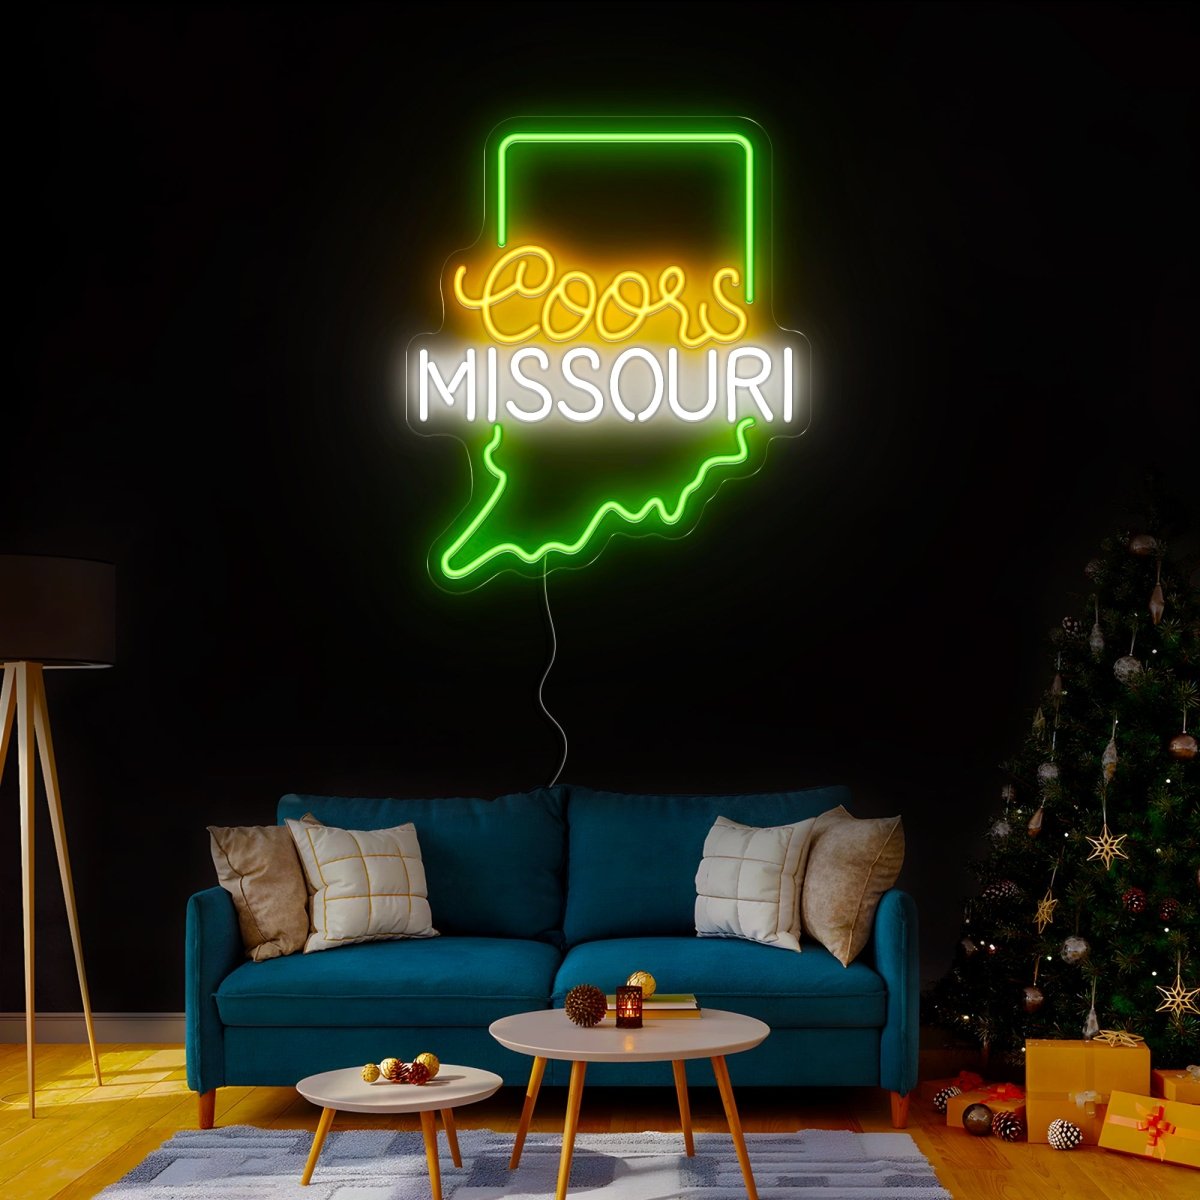 Coors American Missouri Maps Neon Sign - Reels Custom